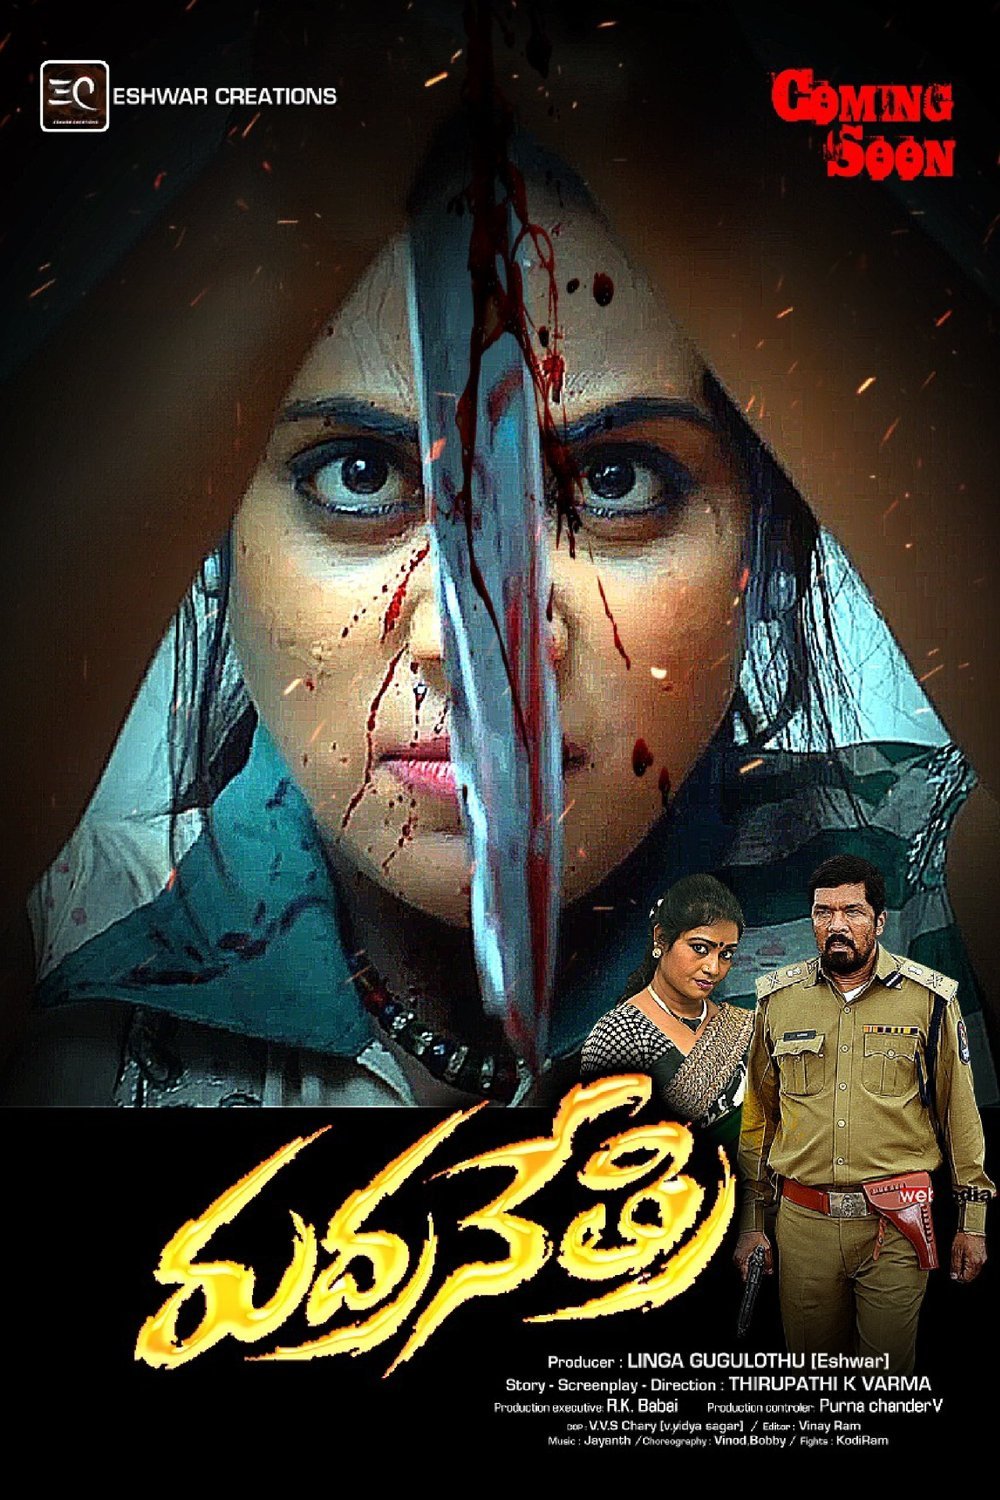 Telugu poster of the movie Rudranetri